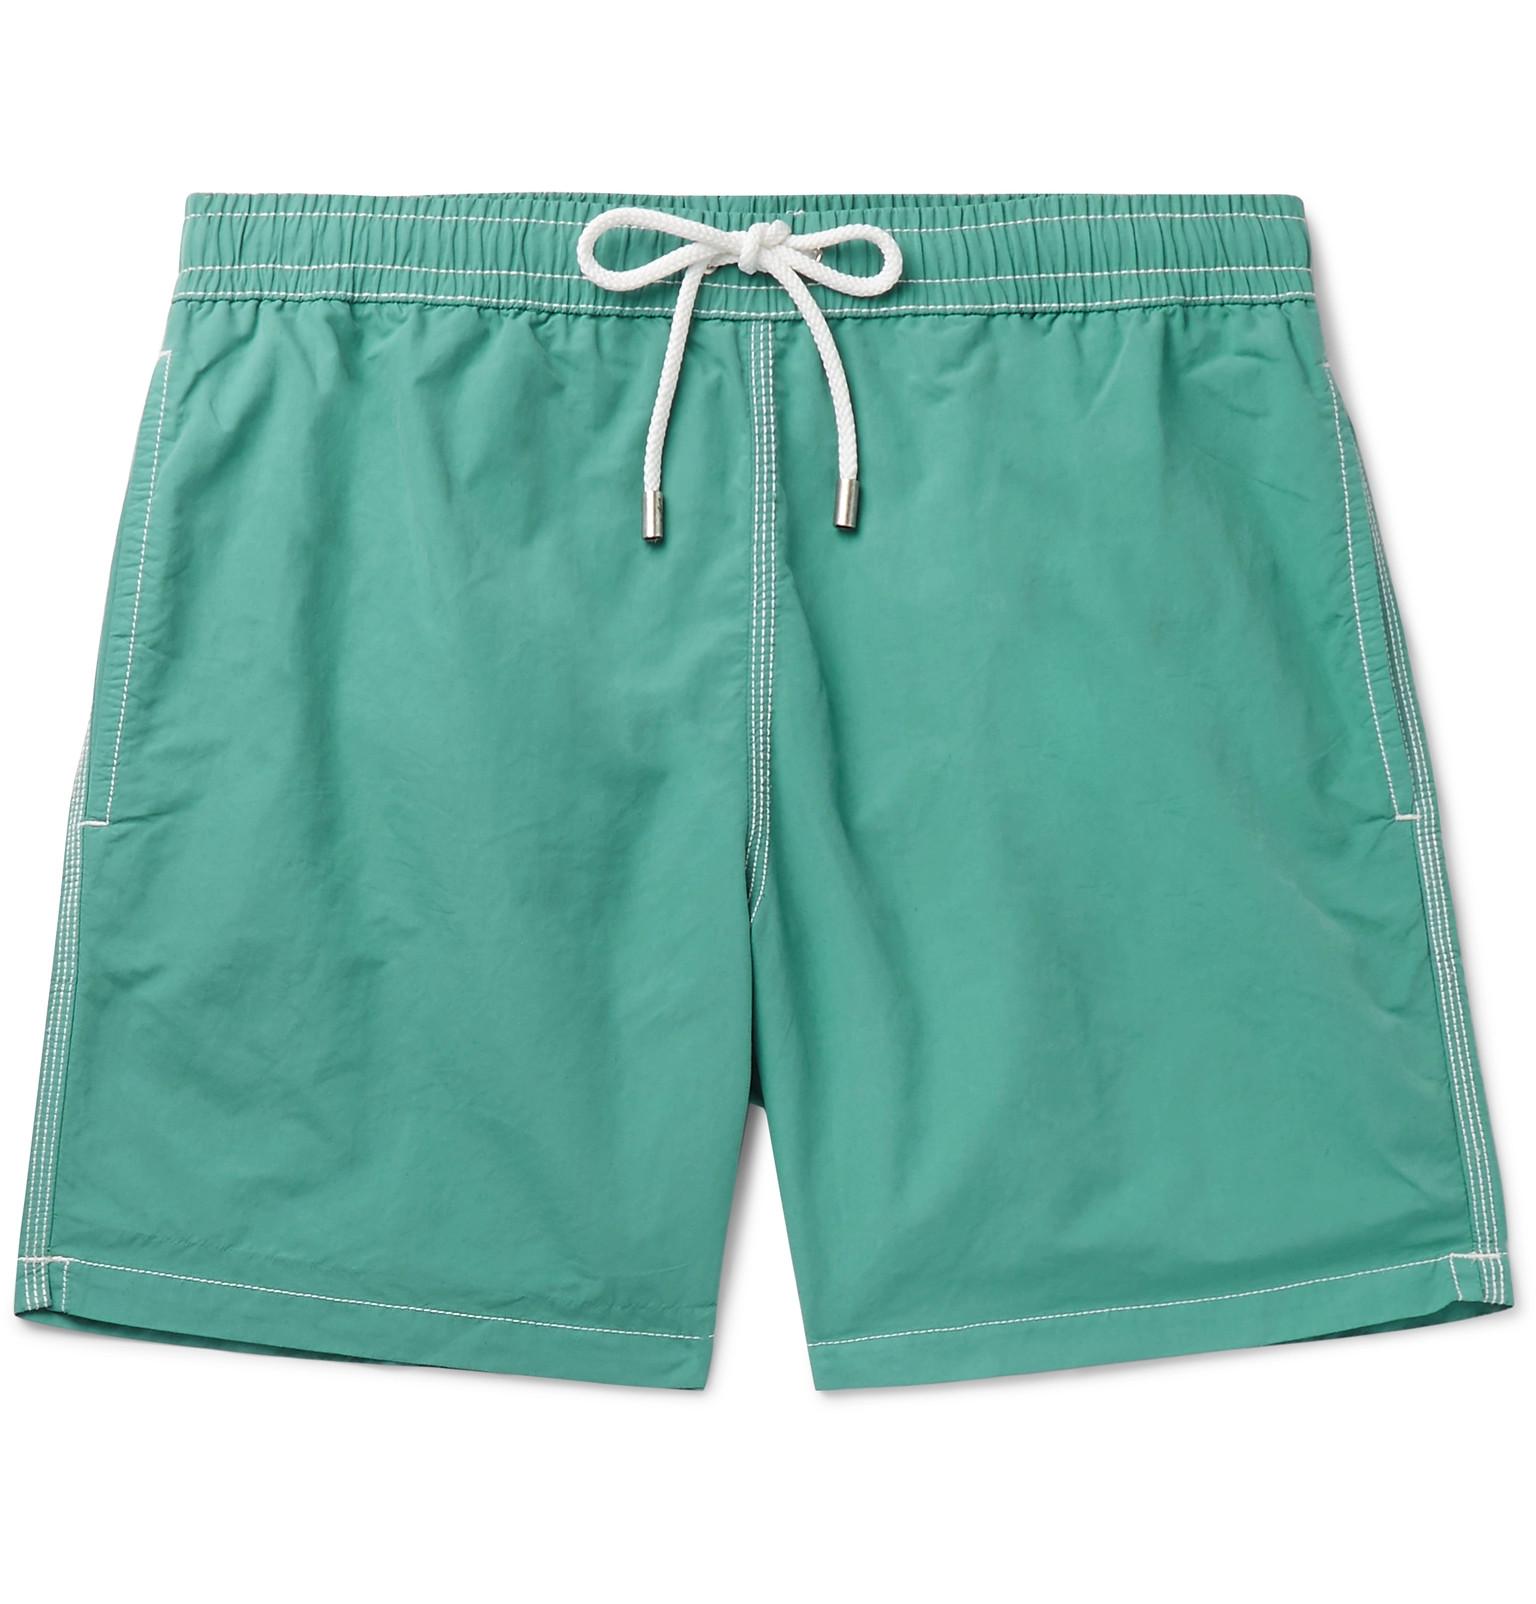 Hartford Cotton Mid-length Swim Shorts in Green for Men - Lyst